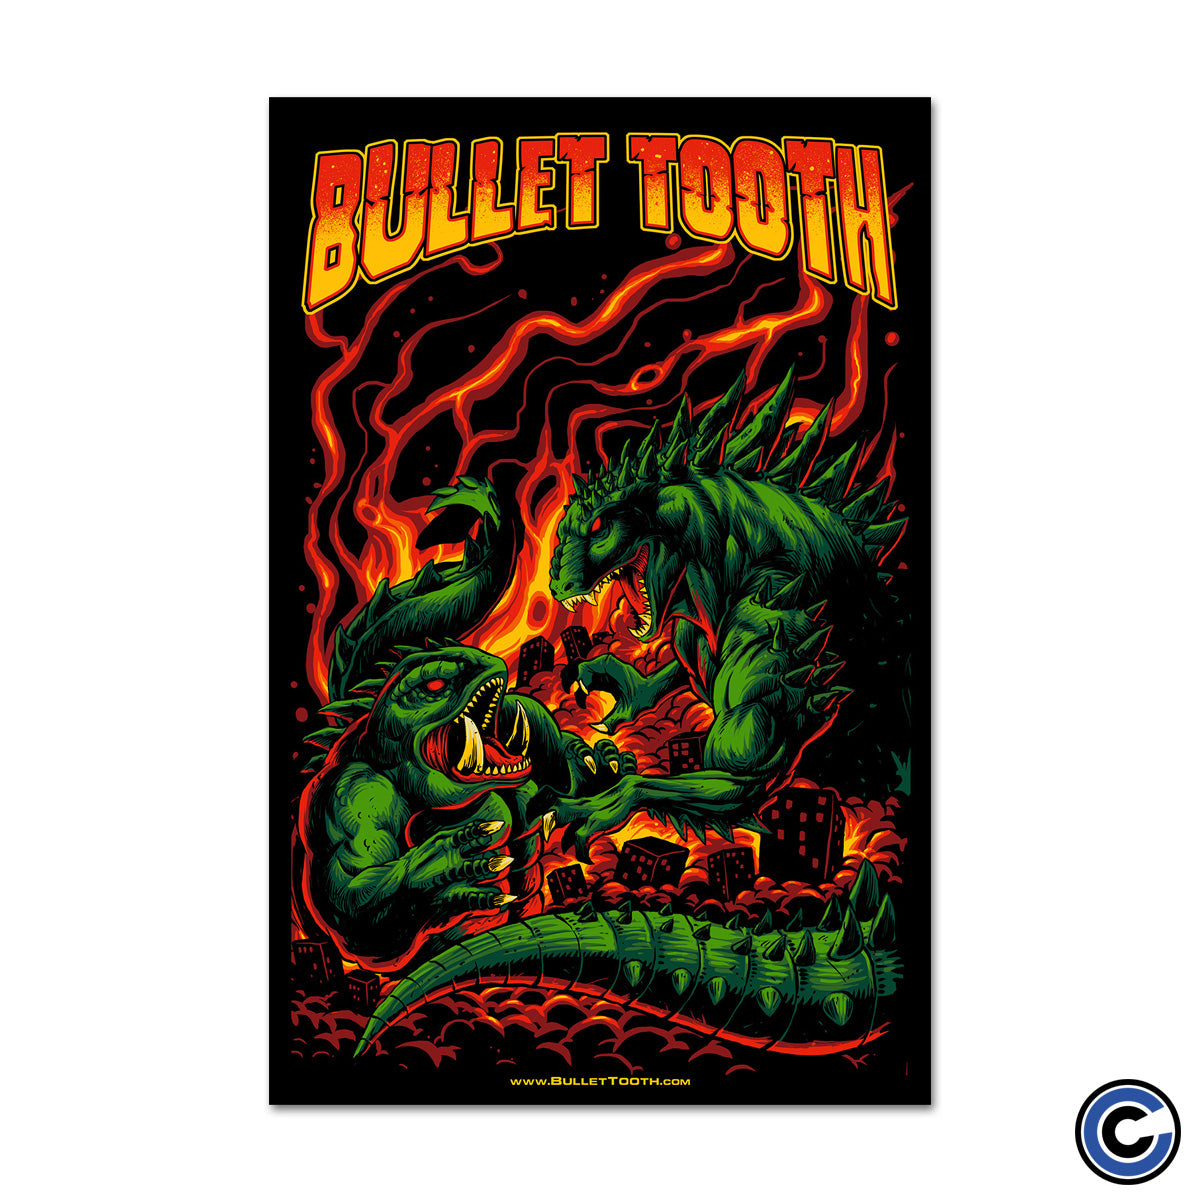 Bullet Tooth "Godzilla" Poster